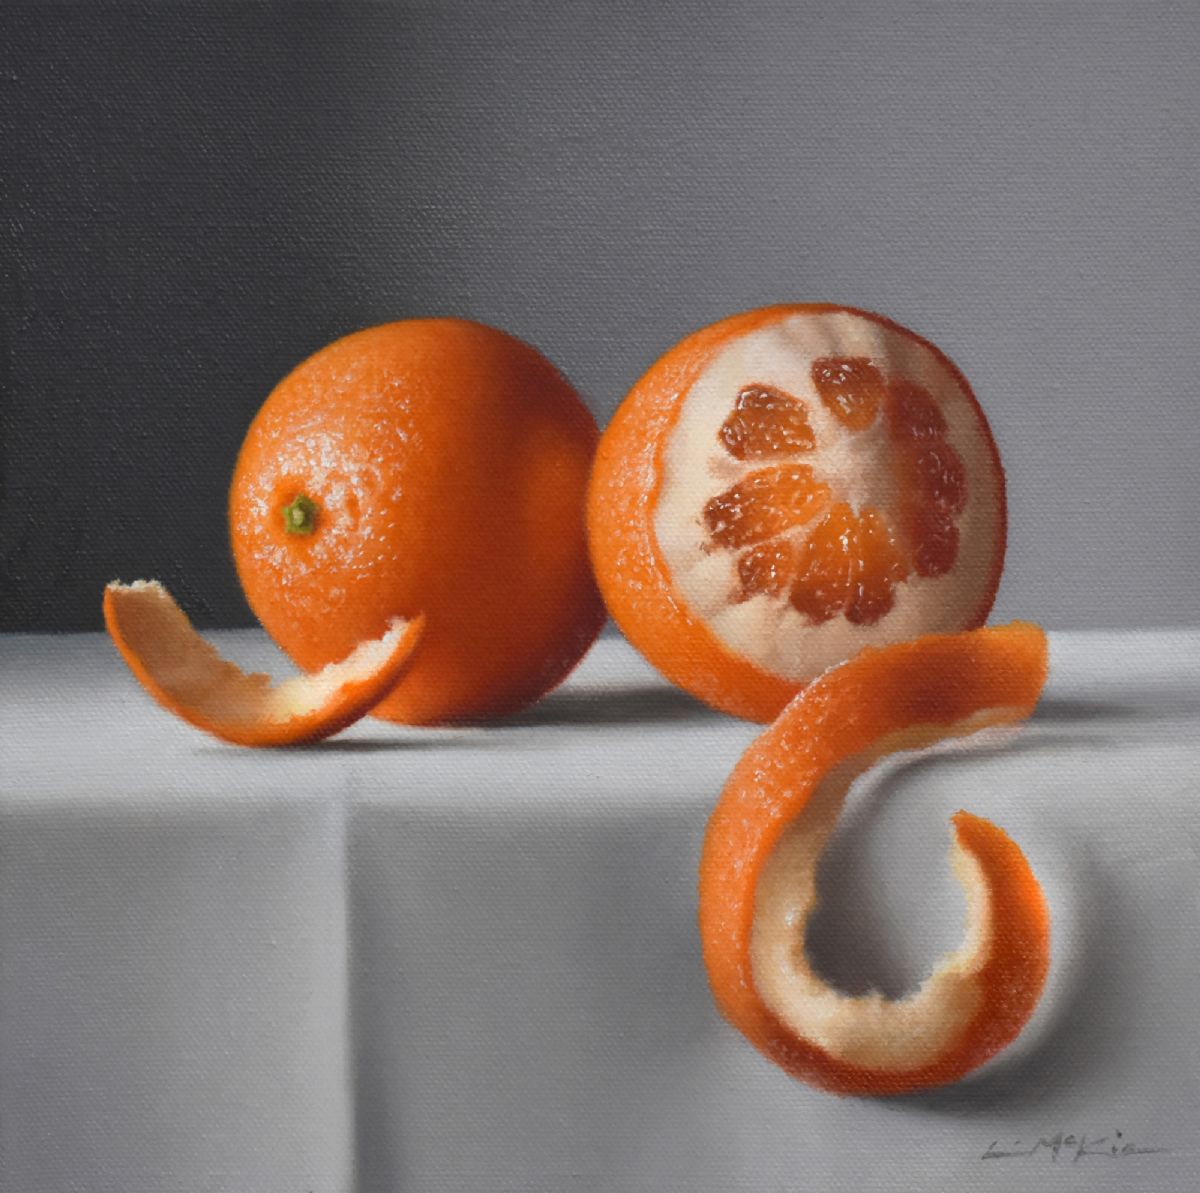 Two Oranges with Peel